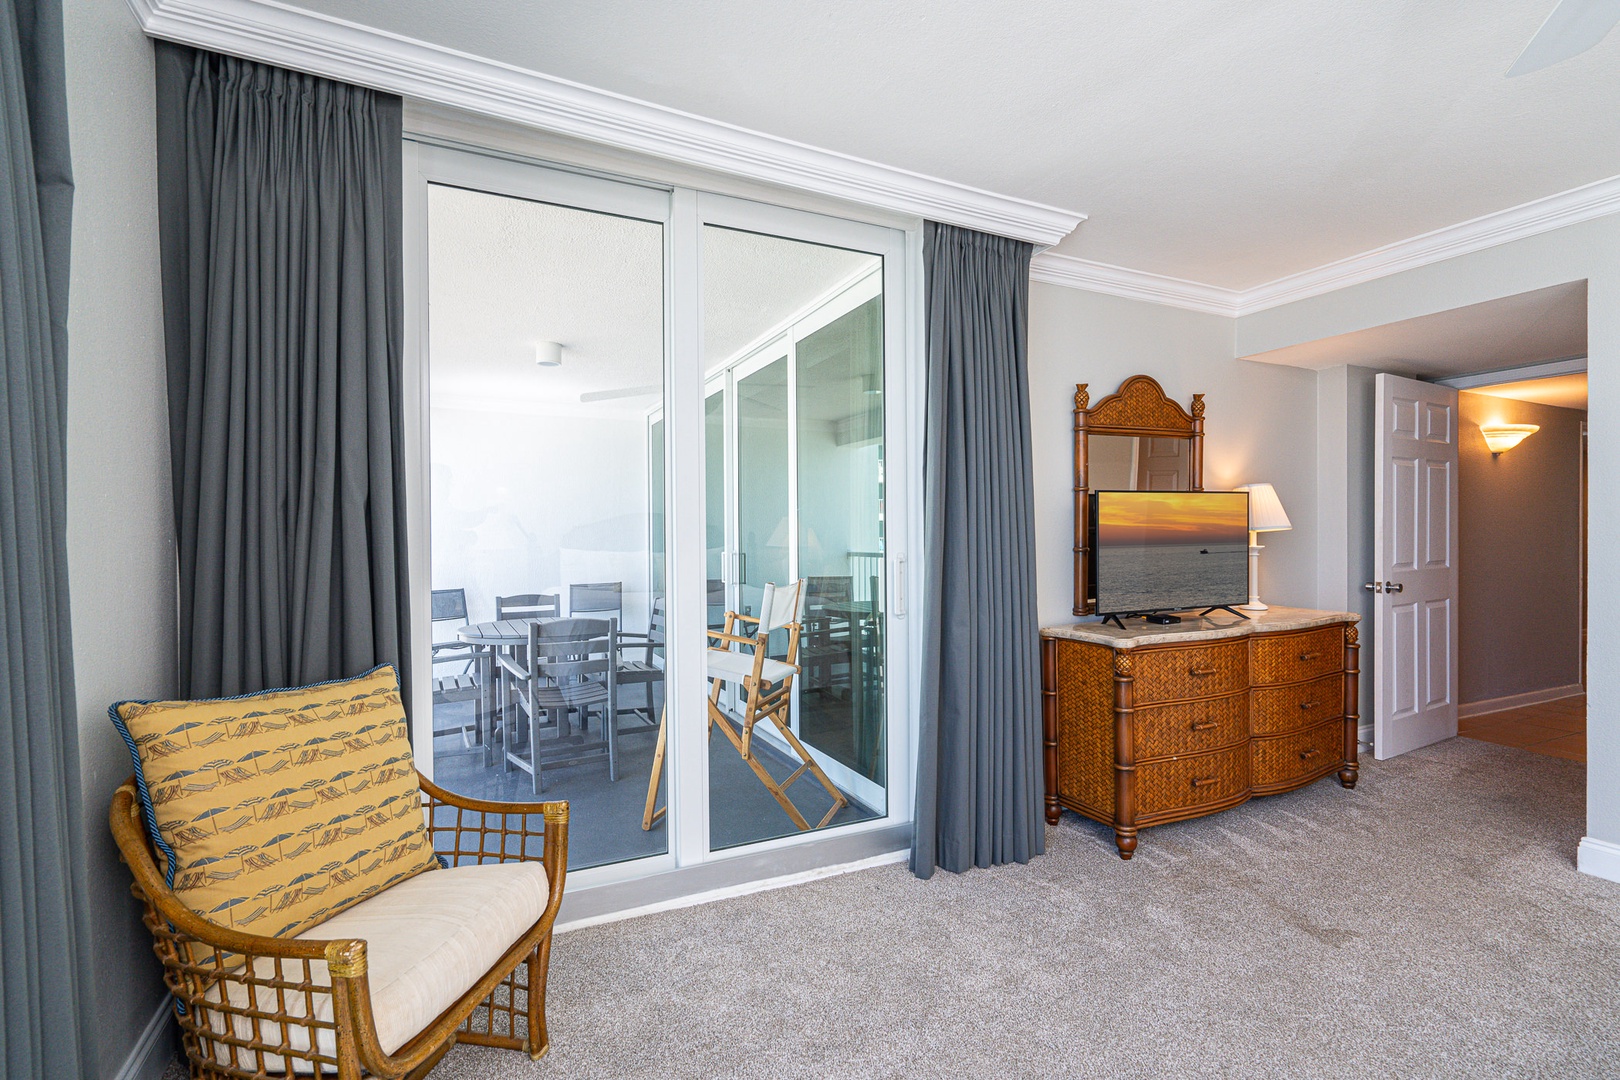 Bedroom 1 with King bed, ocean view, balcony access, TV, and en-suite